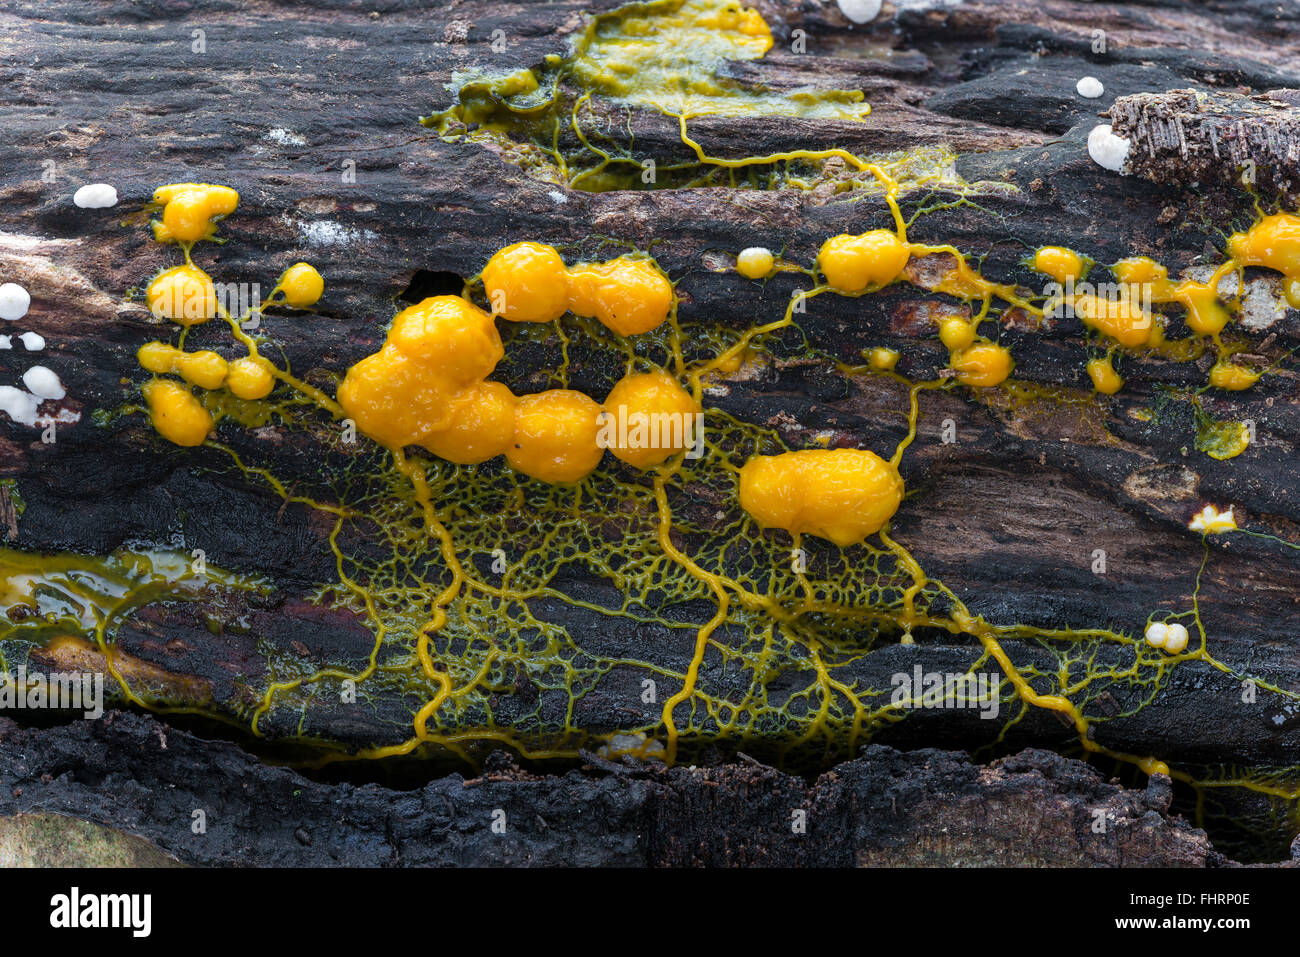 Many-headed slime (Physarum polycephalum) on deadwood, Hesse, Germany Stock Photo